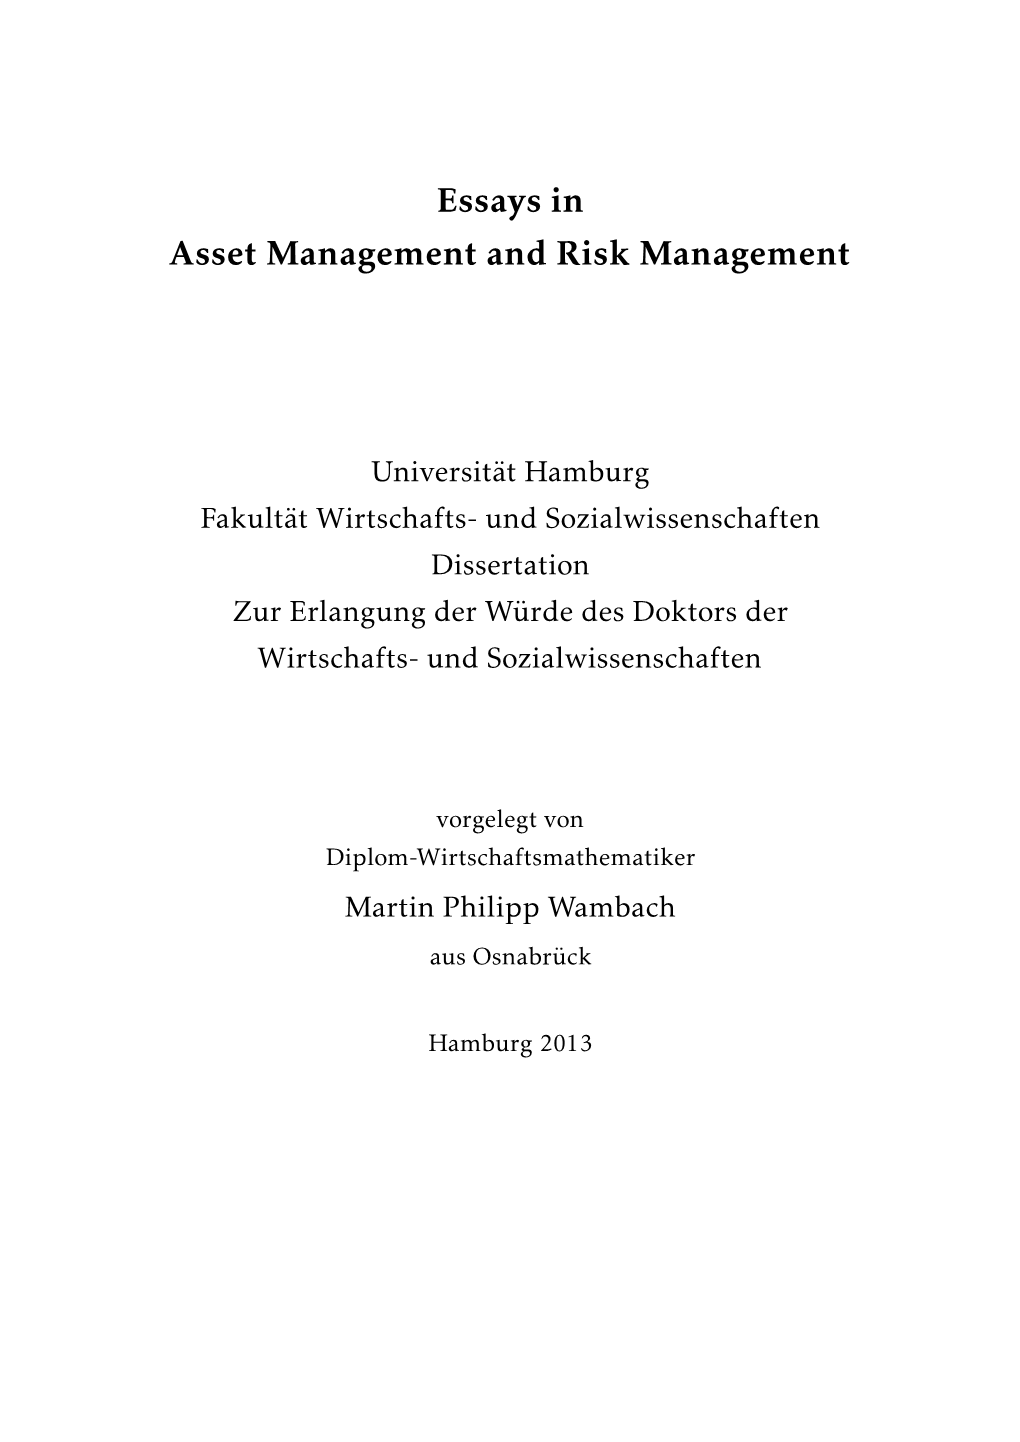 Essays in Asset Management and Risk Management